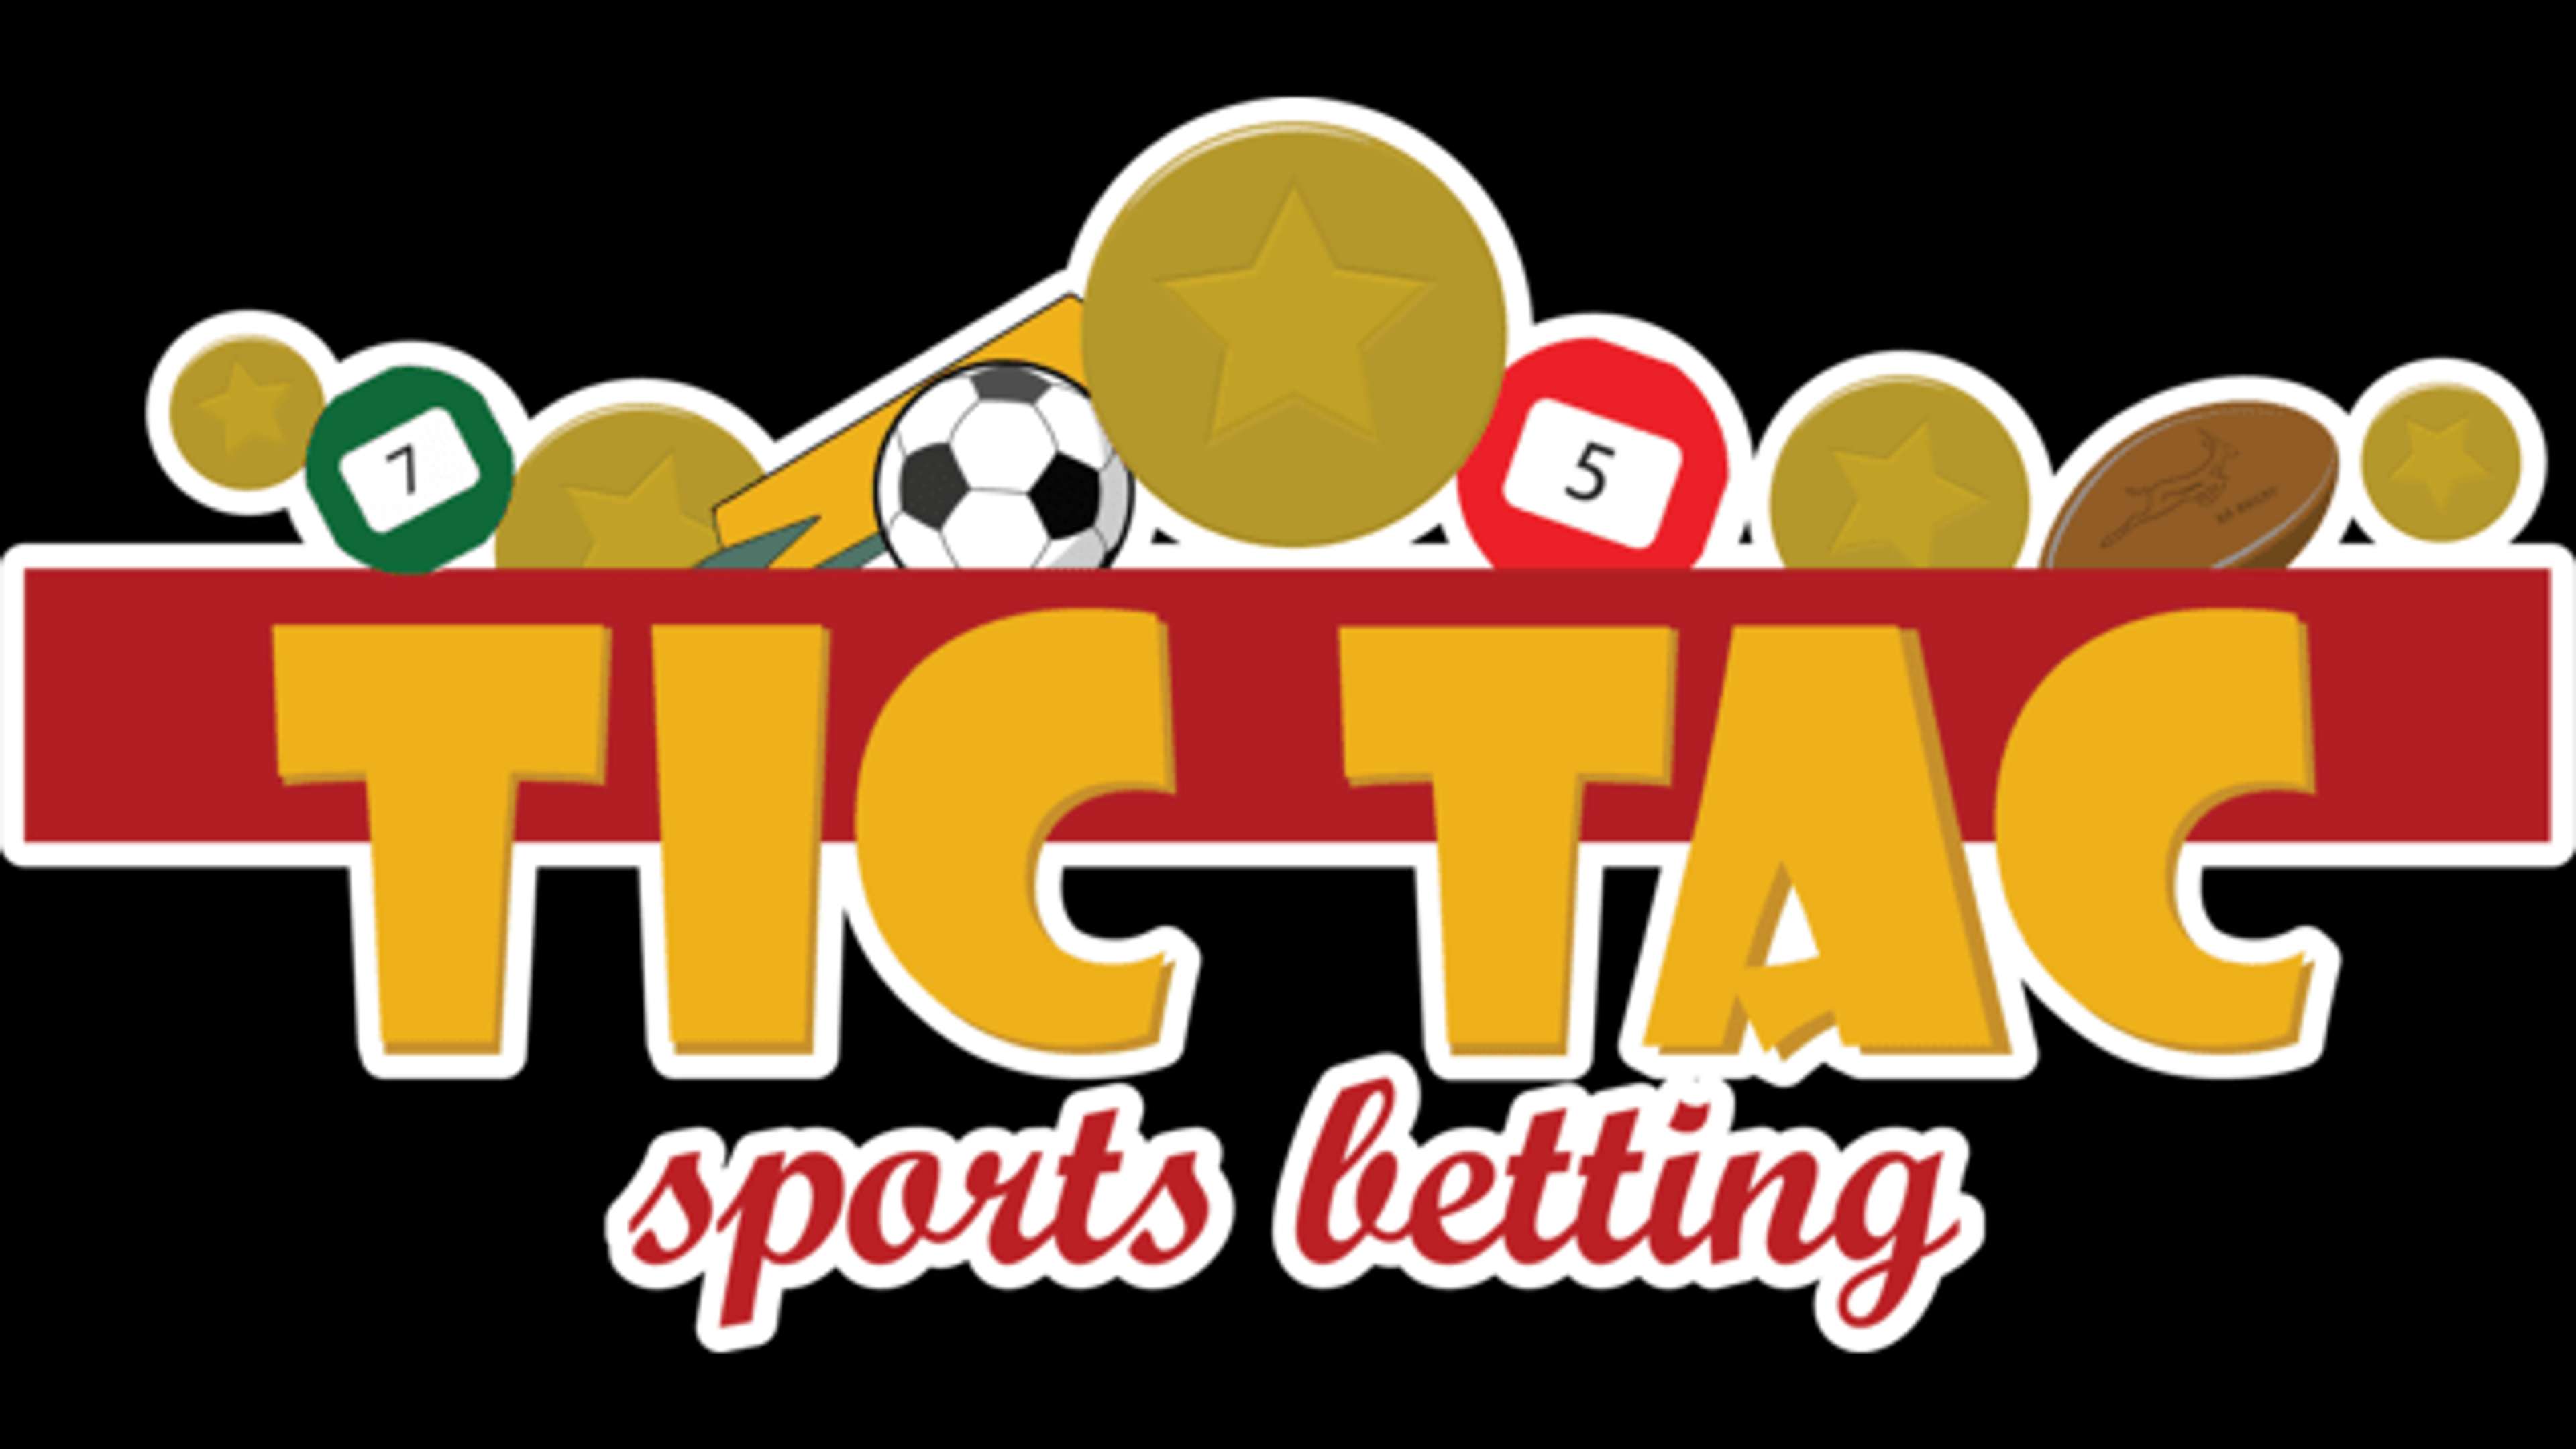 tic tac bets header logo